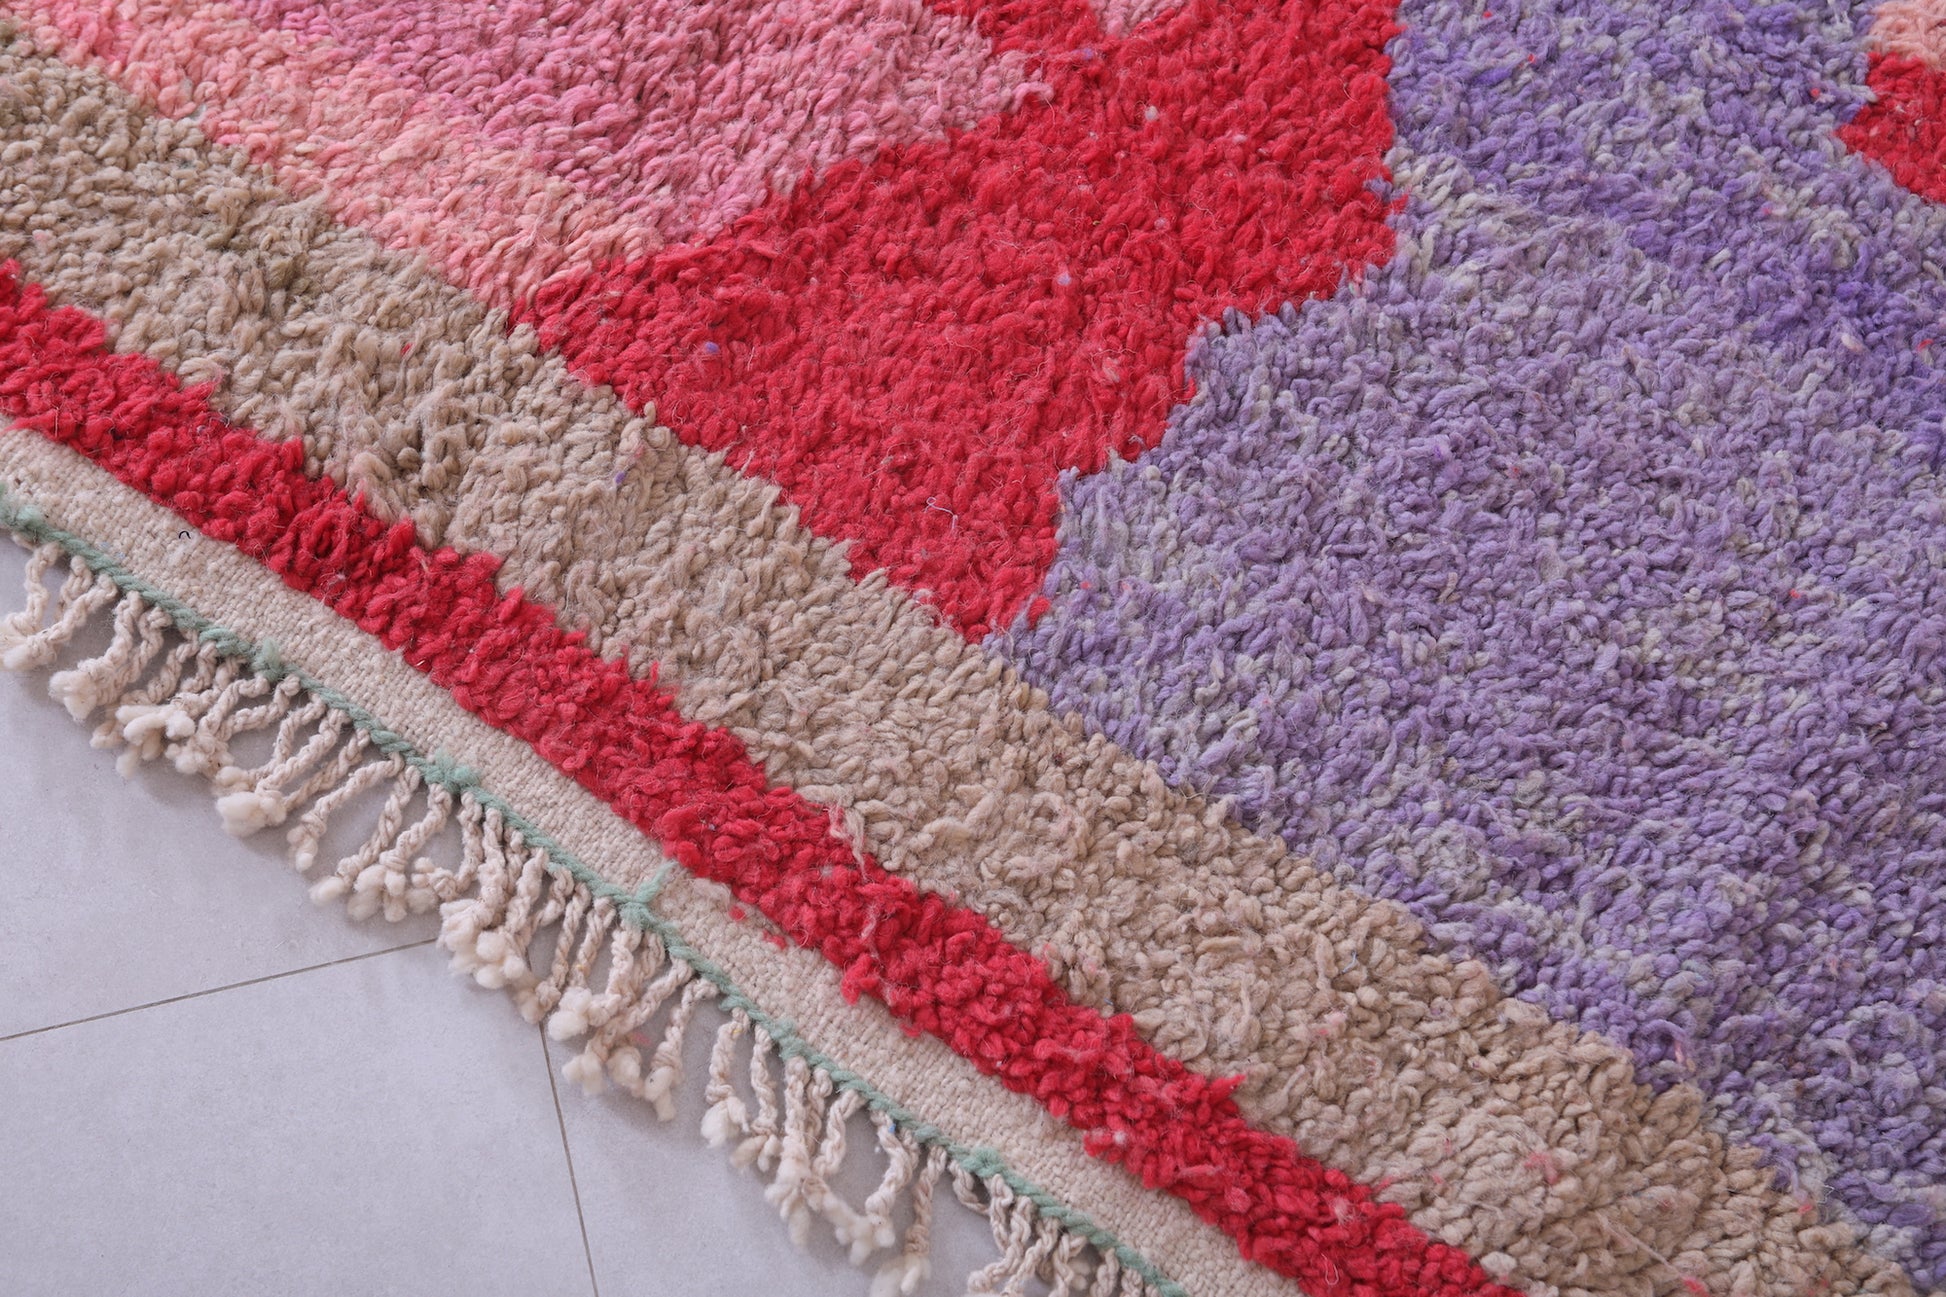 Colourful handmade moroccan berber rug 4.9 FT X 7.7 FT